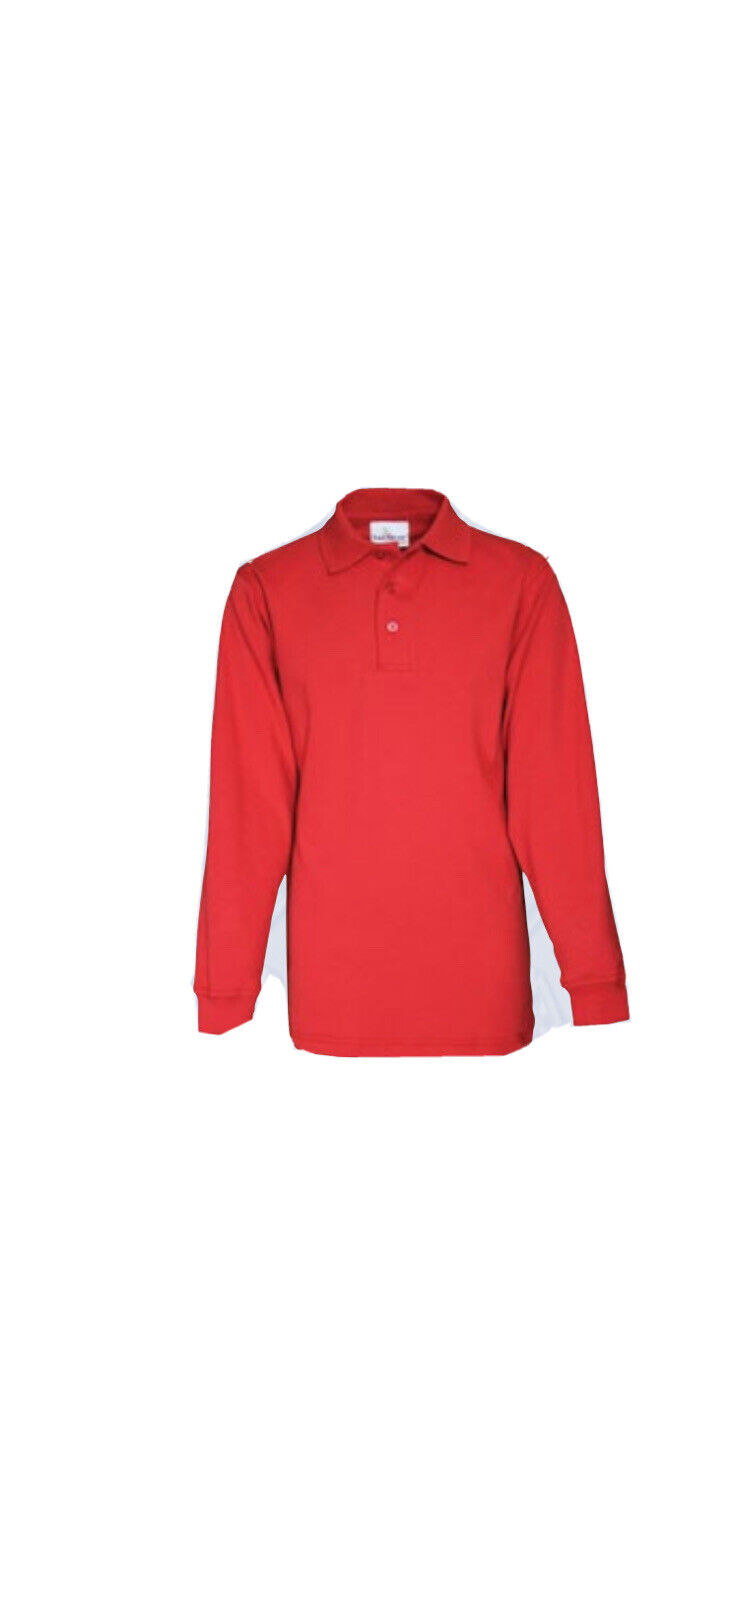 Elder Unisex Long Sleeve Polo - Red - New - Style #5639 - YXS